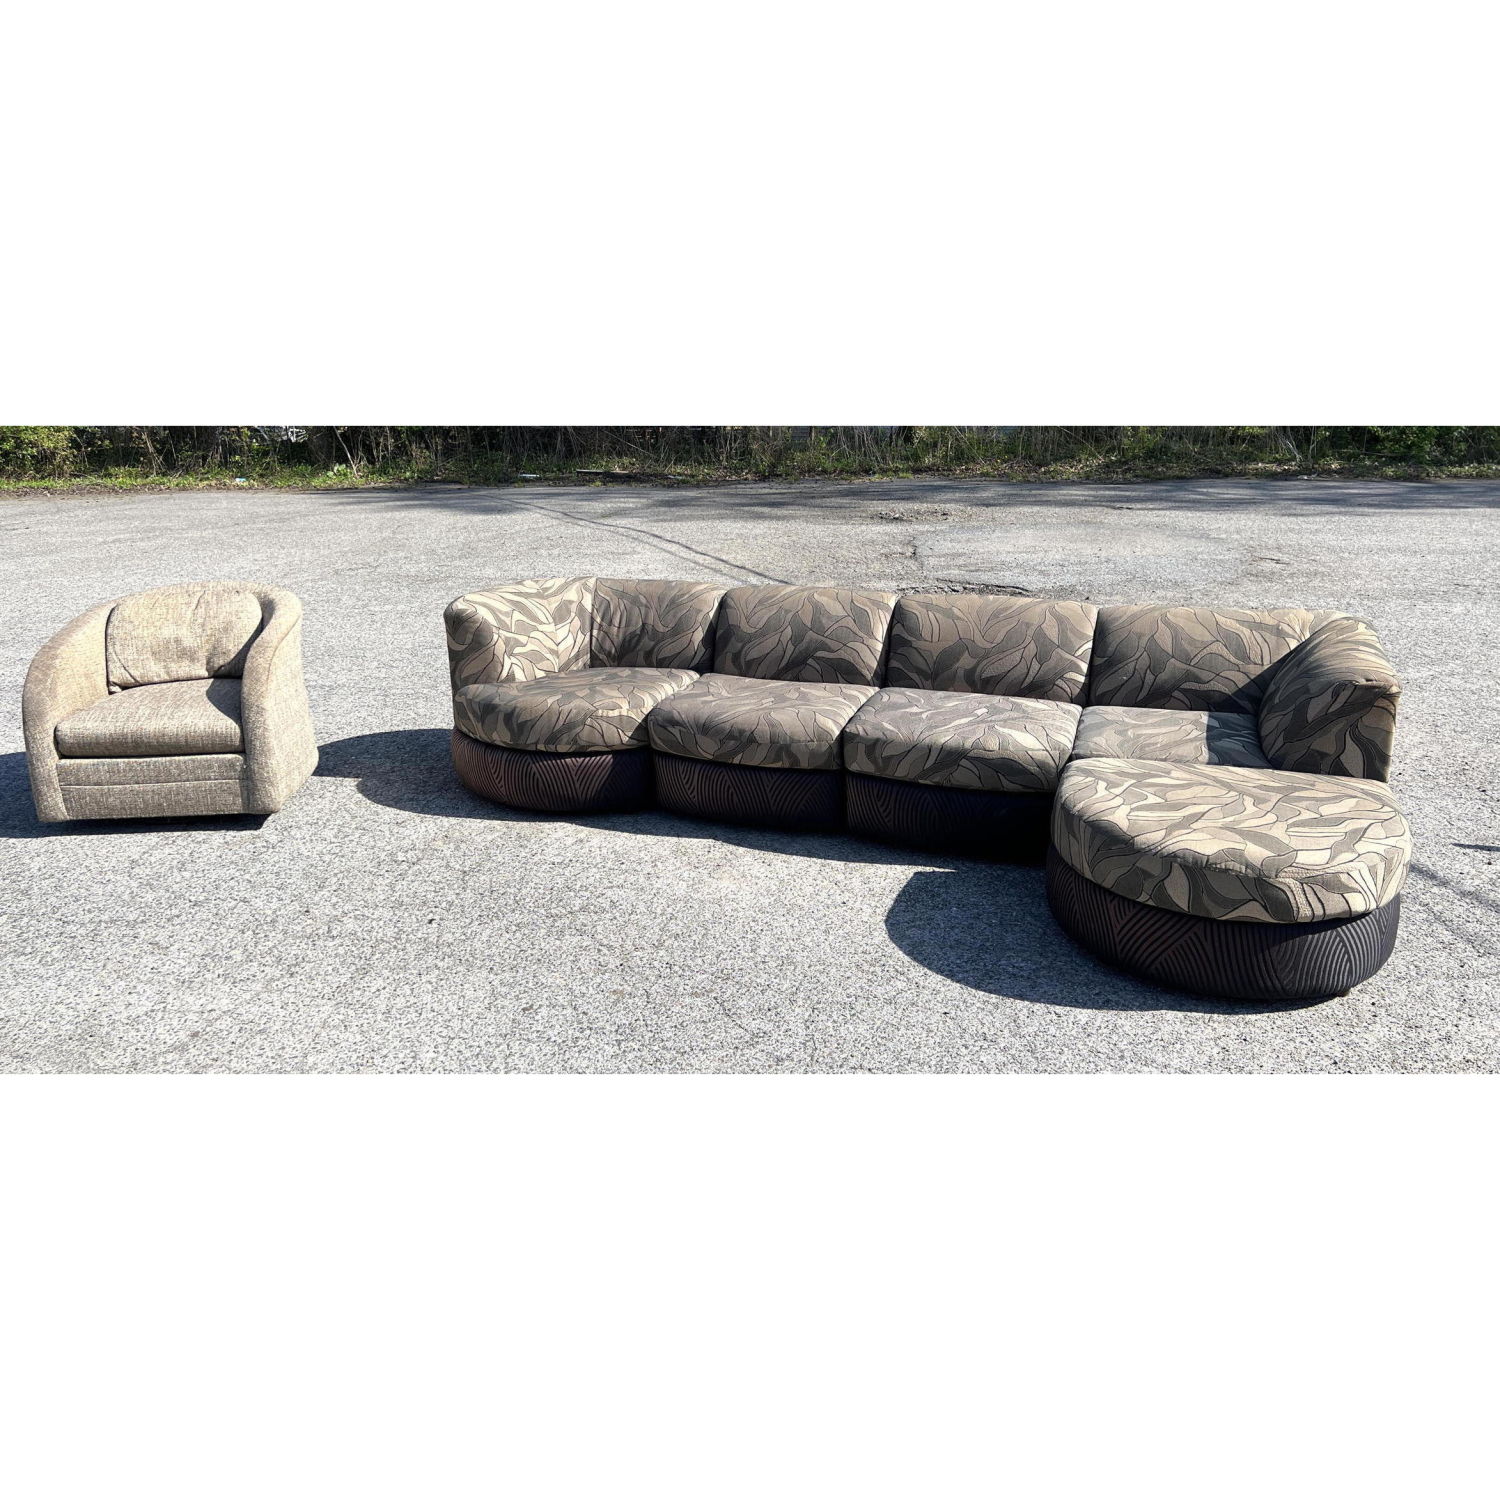 WEIMAN Five piece sectional sofa set